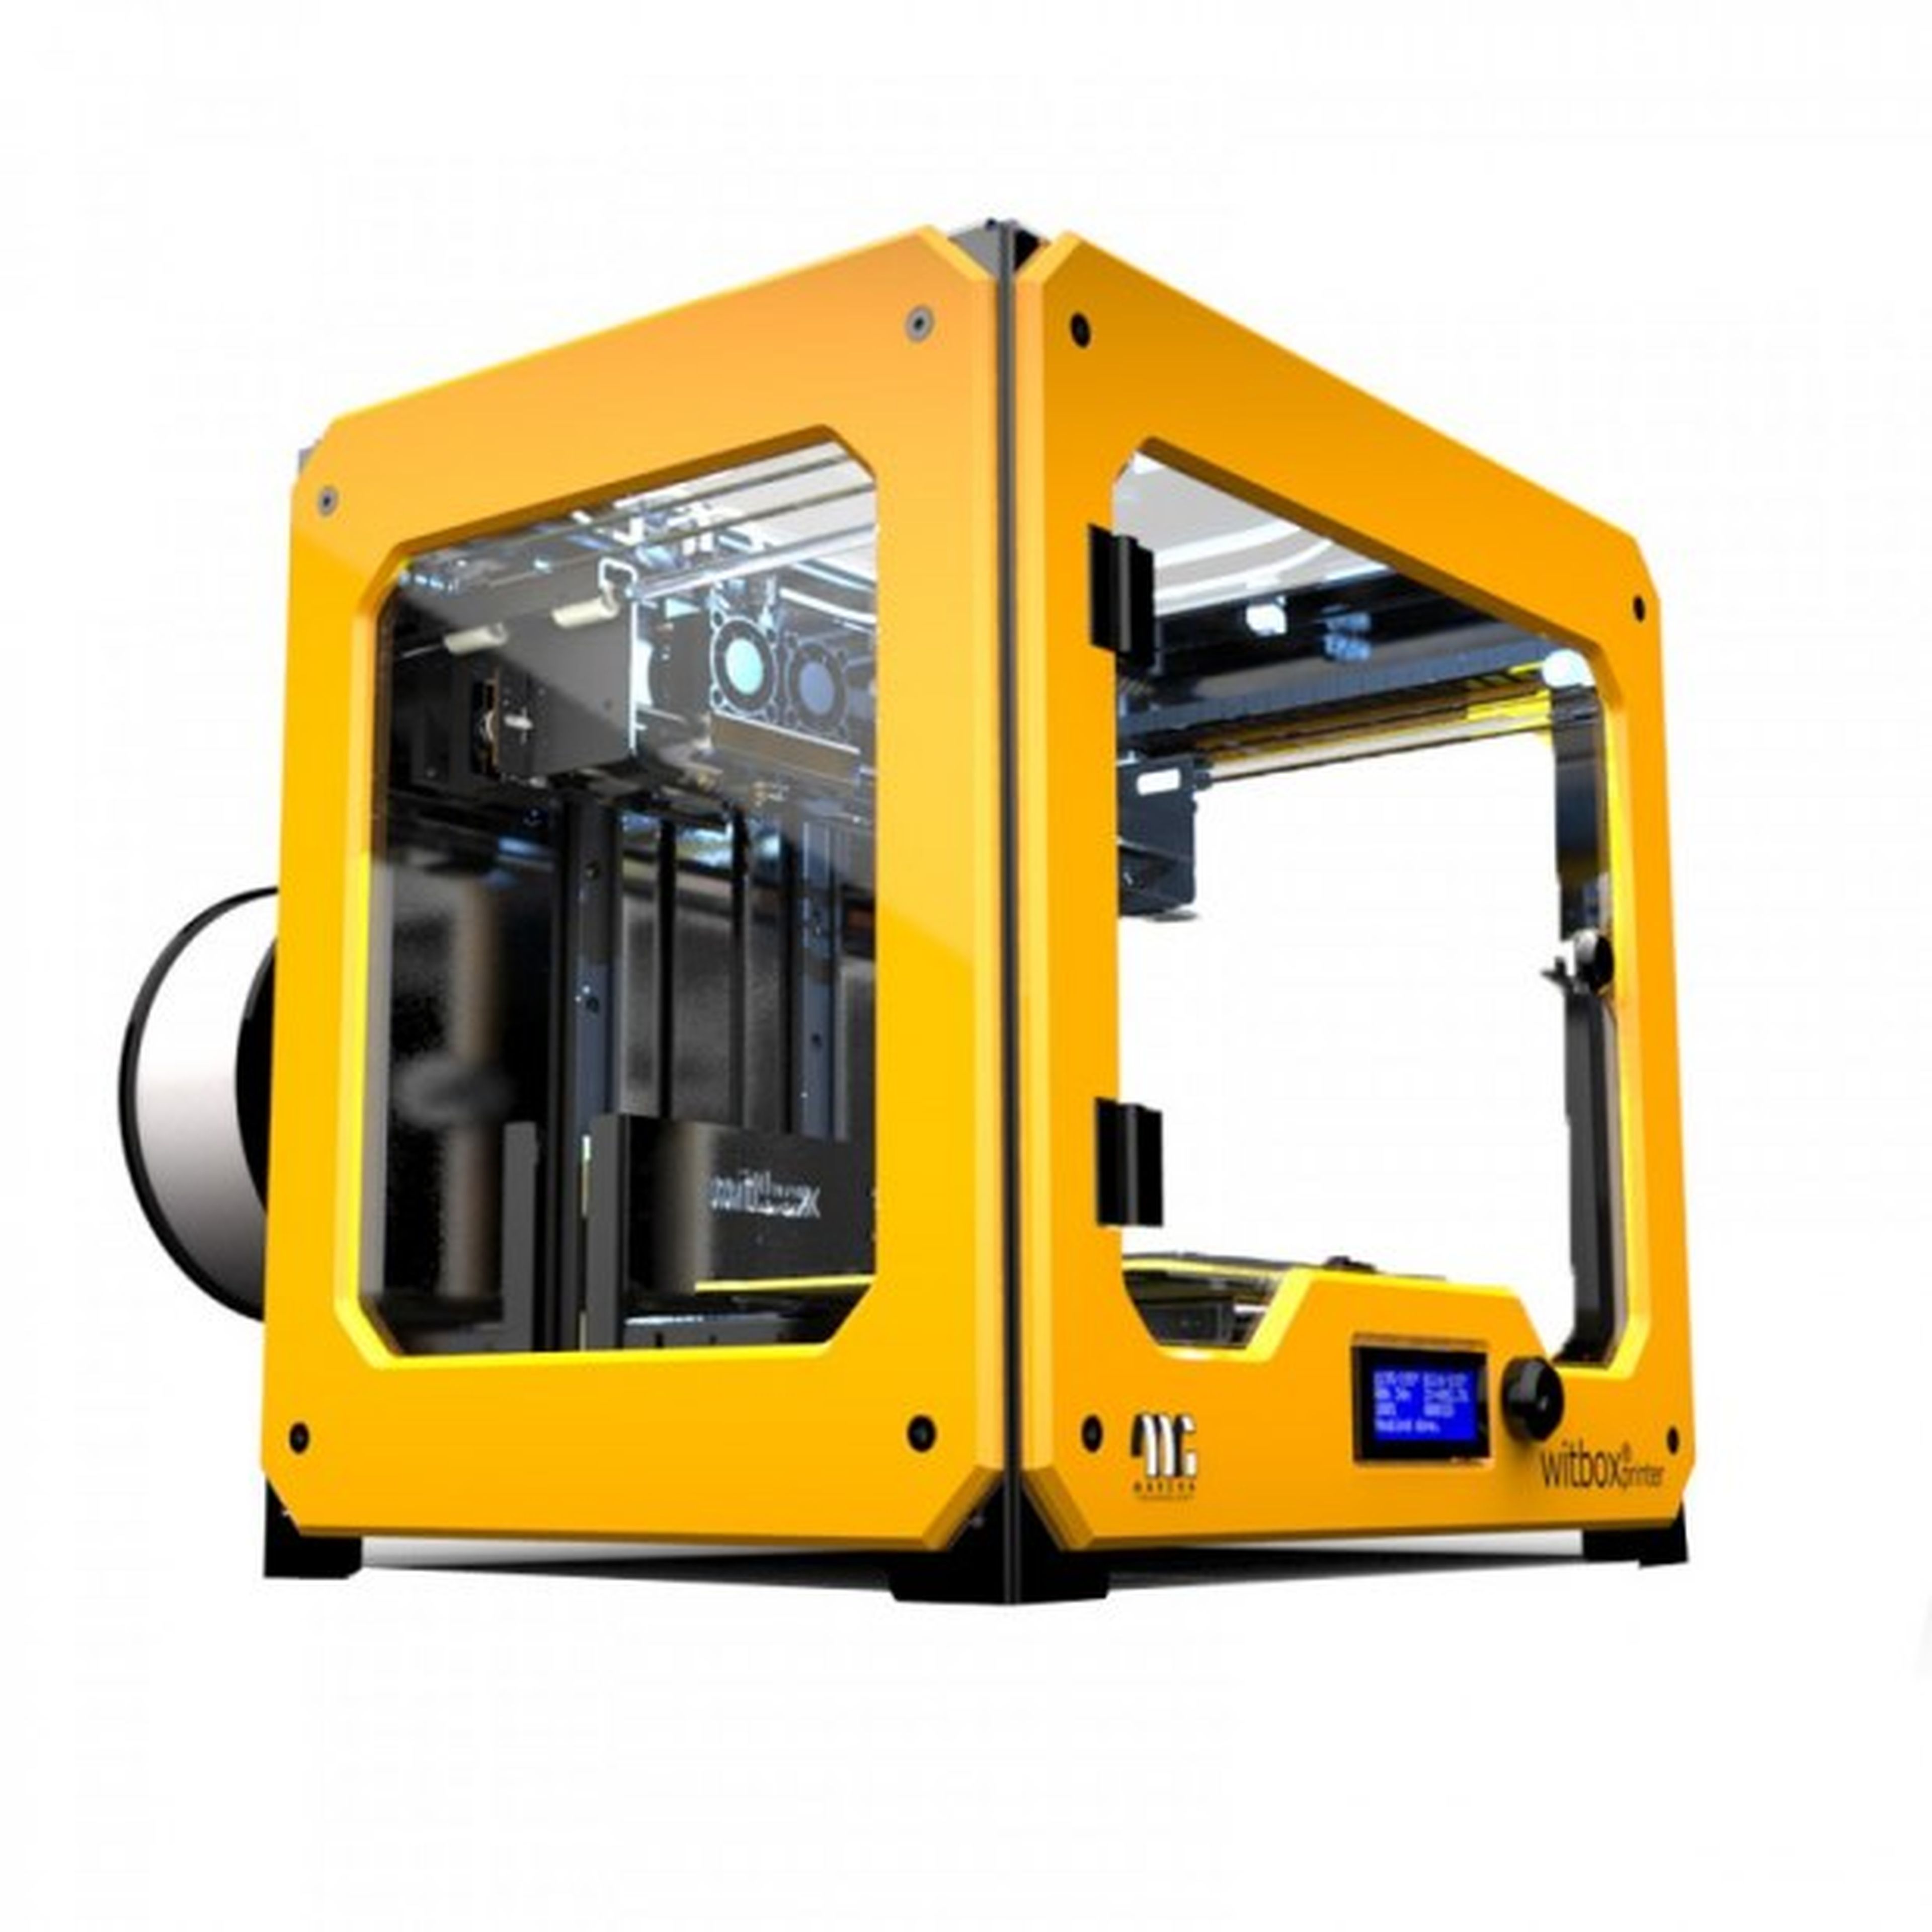 Impresora 3D bq Witbox